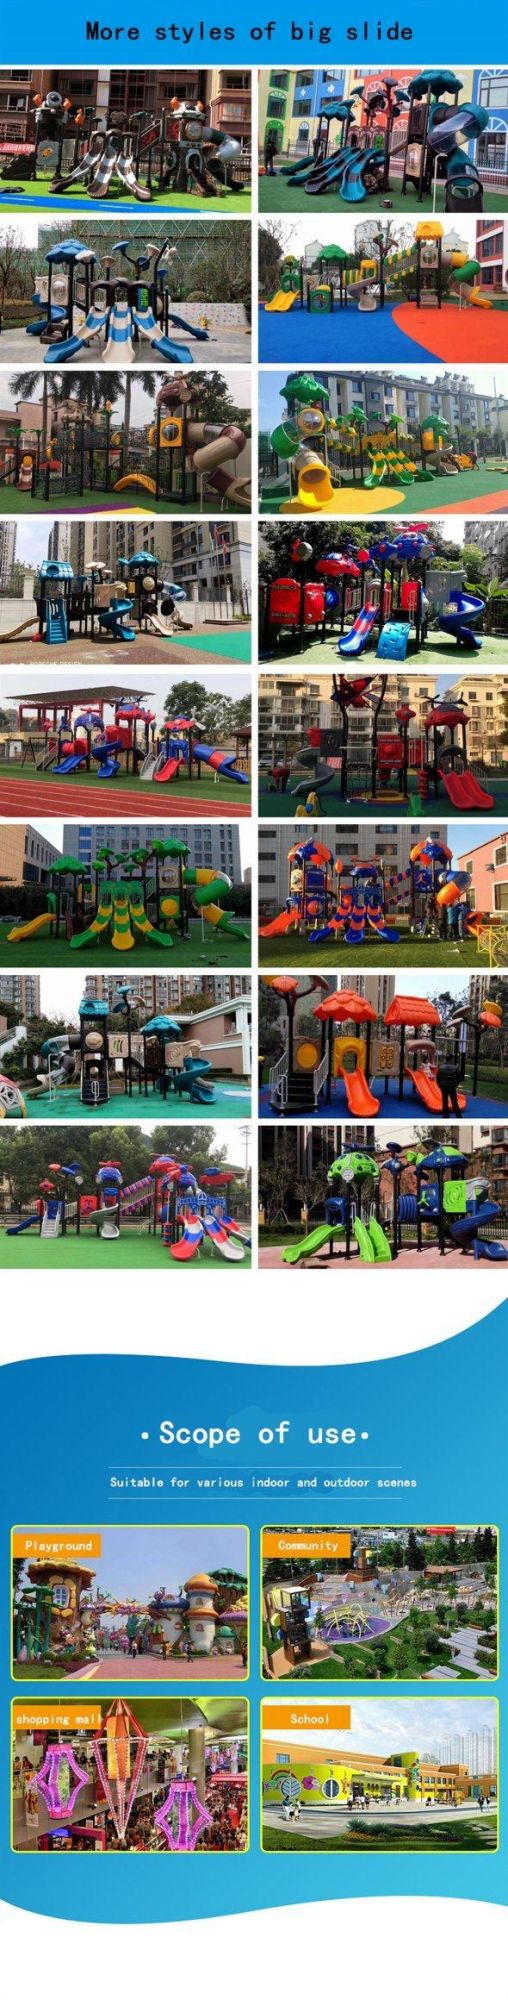 Customized Children′s Outdoor Playground Indoor Kids Amusement Park Equipment